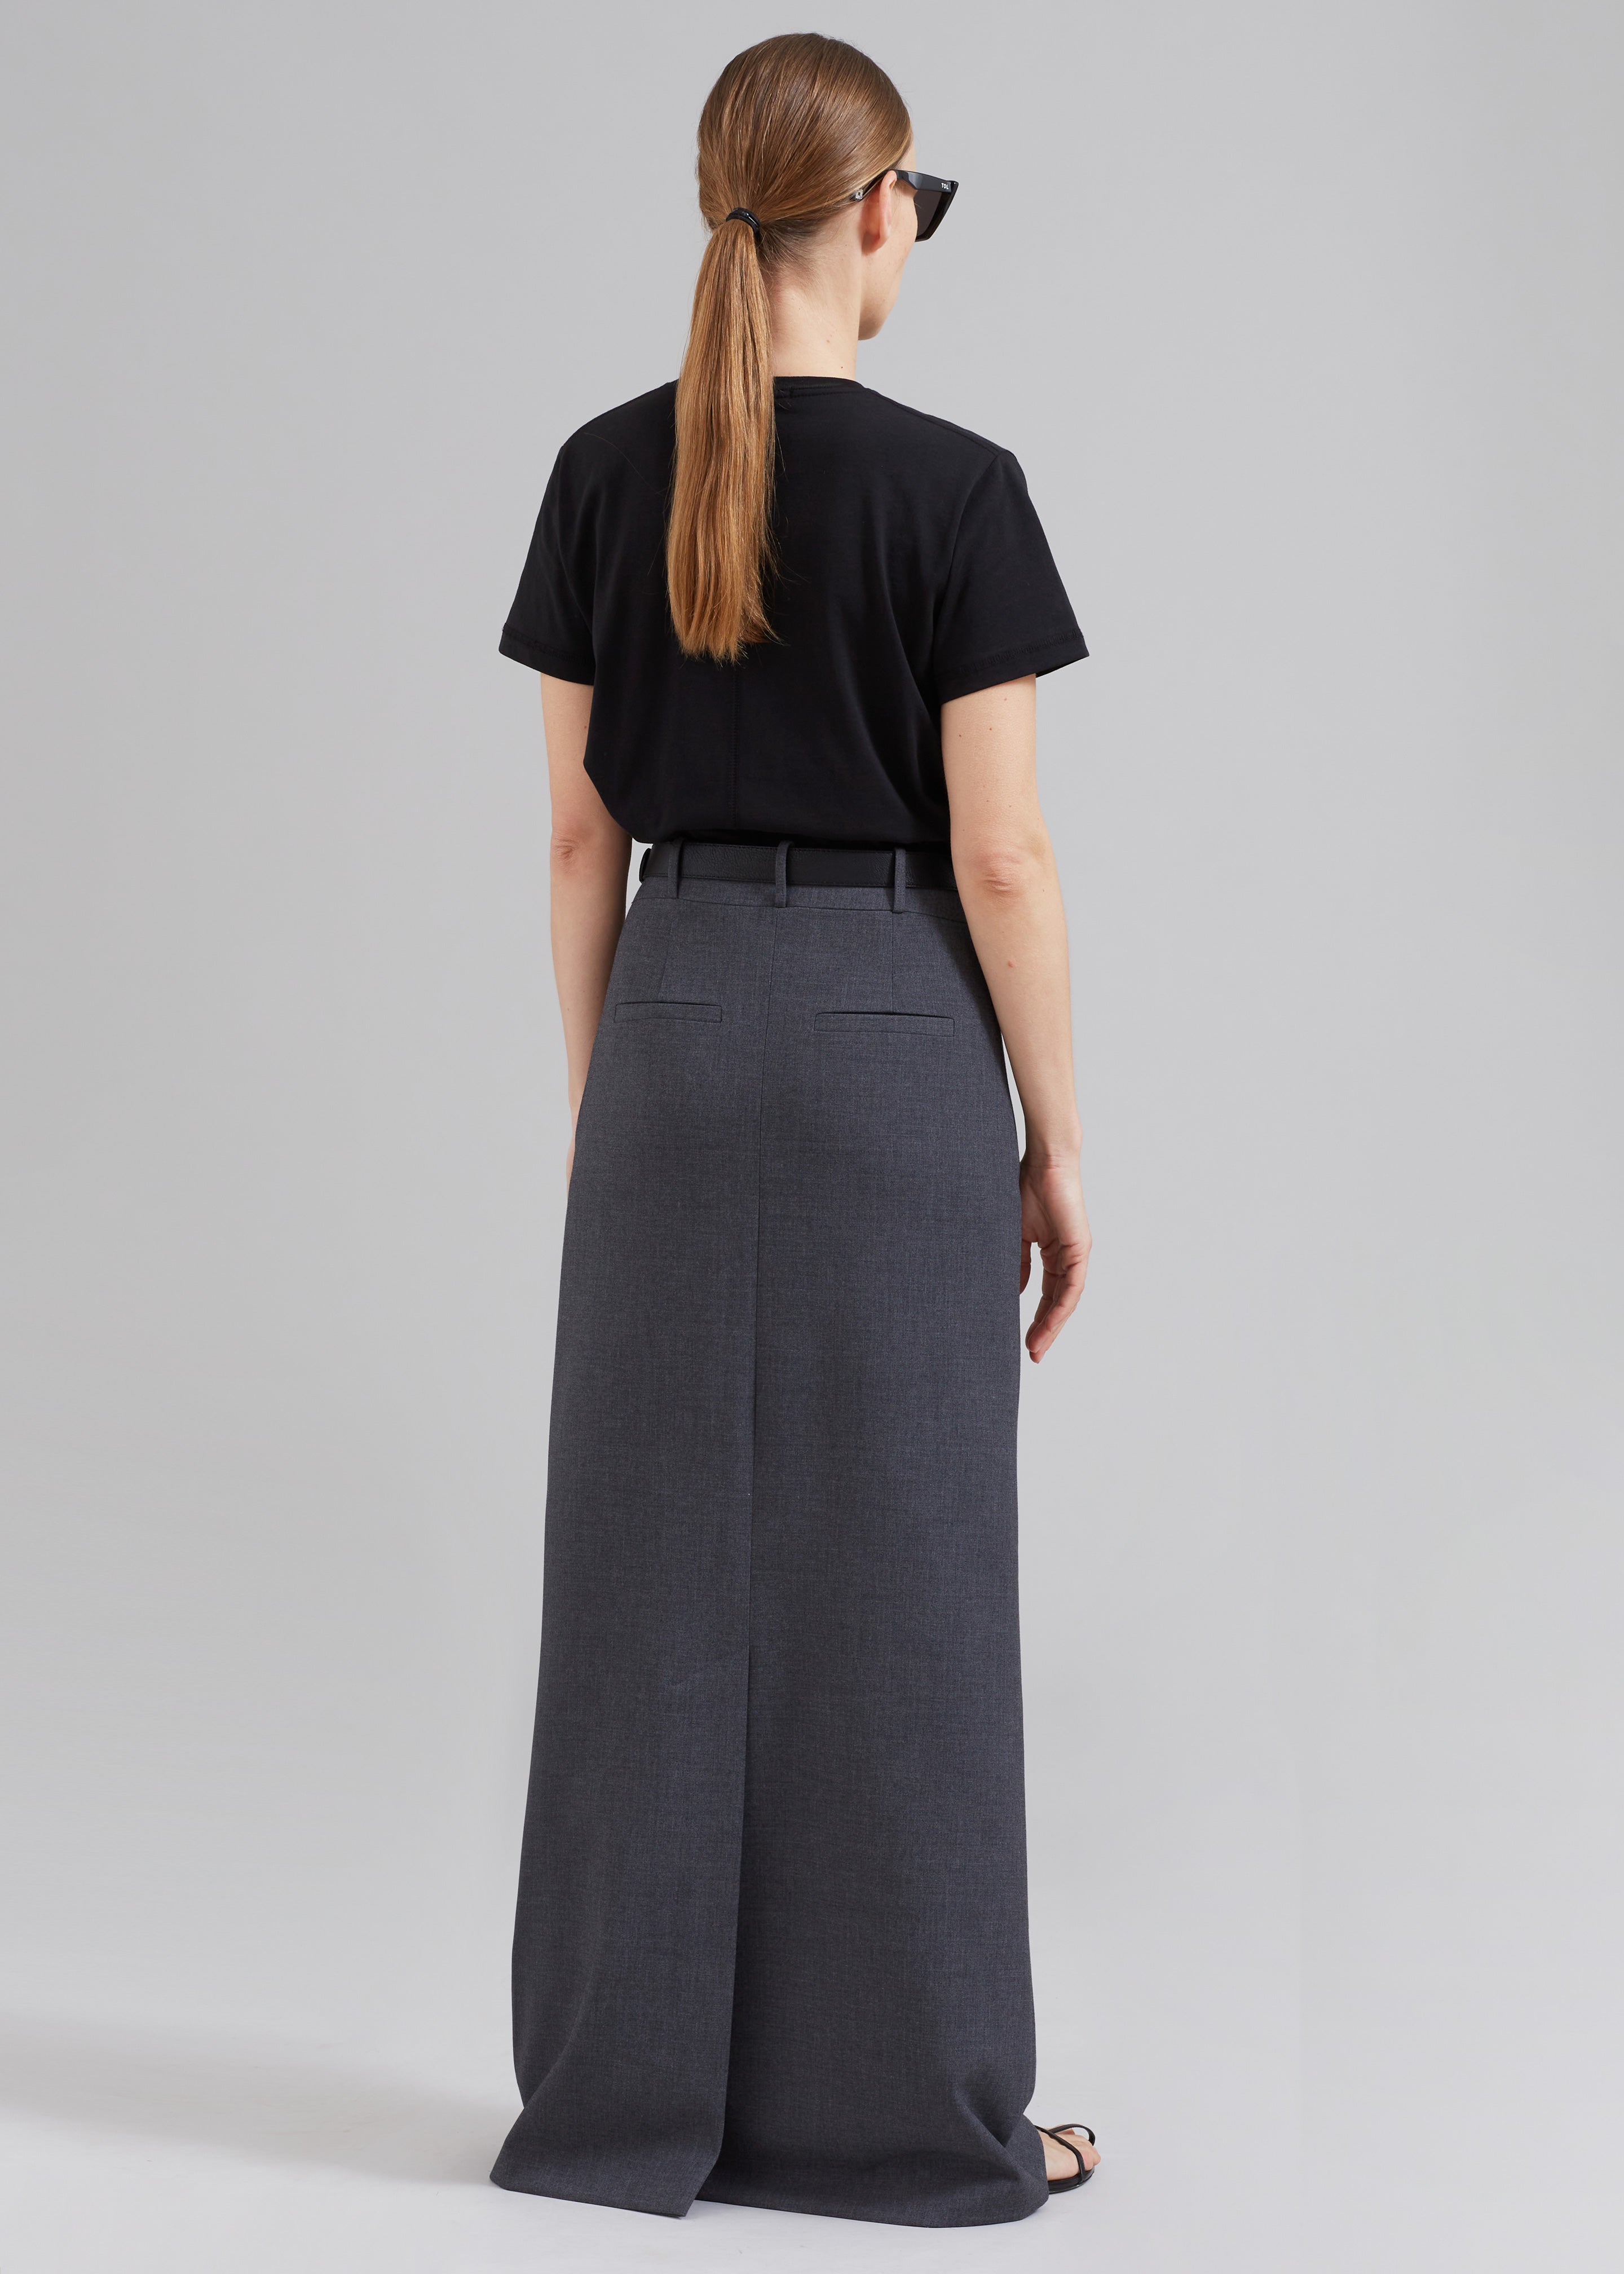 Malvo Long Pencil Skirt - Charcoal - 7